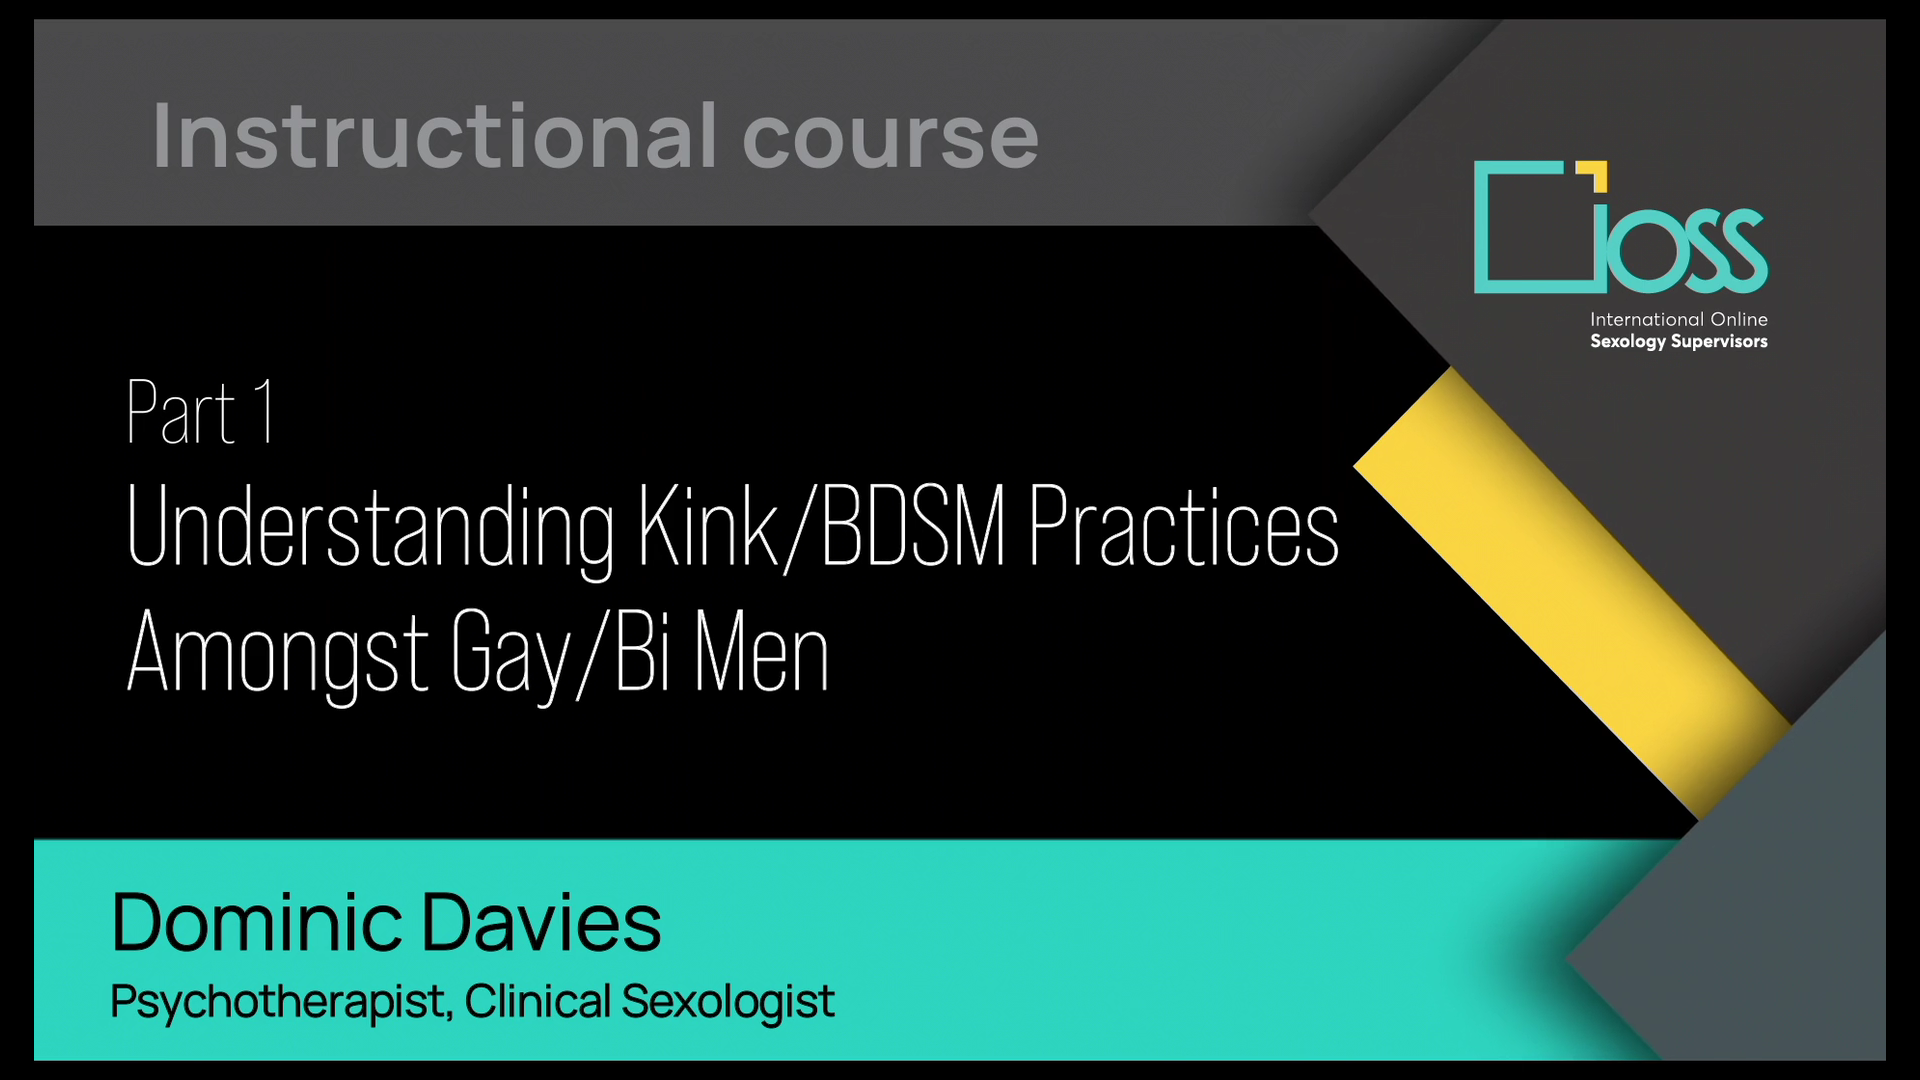 Part 1 Understanding Kink/BDSM Practices Amongst Gay/Bi Men (Part 1 & 2)